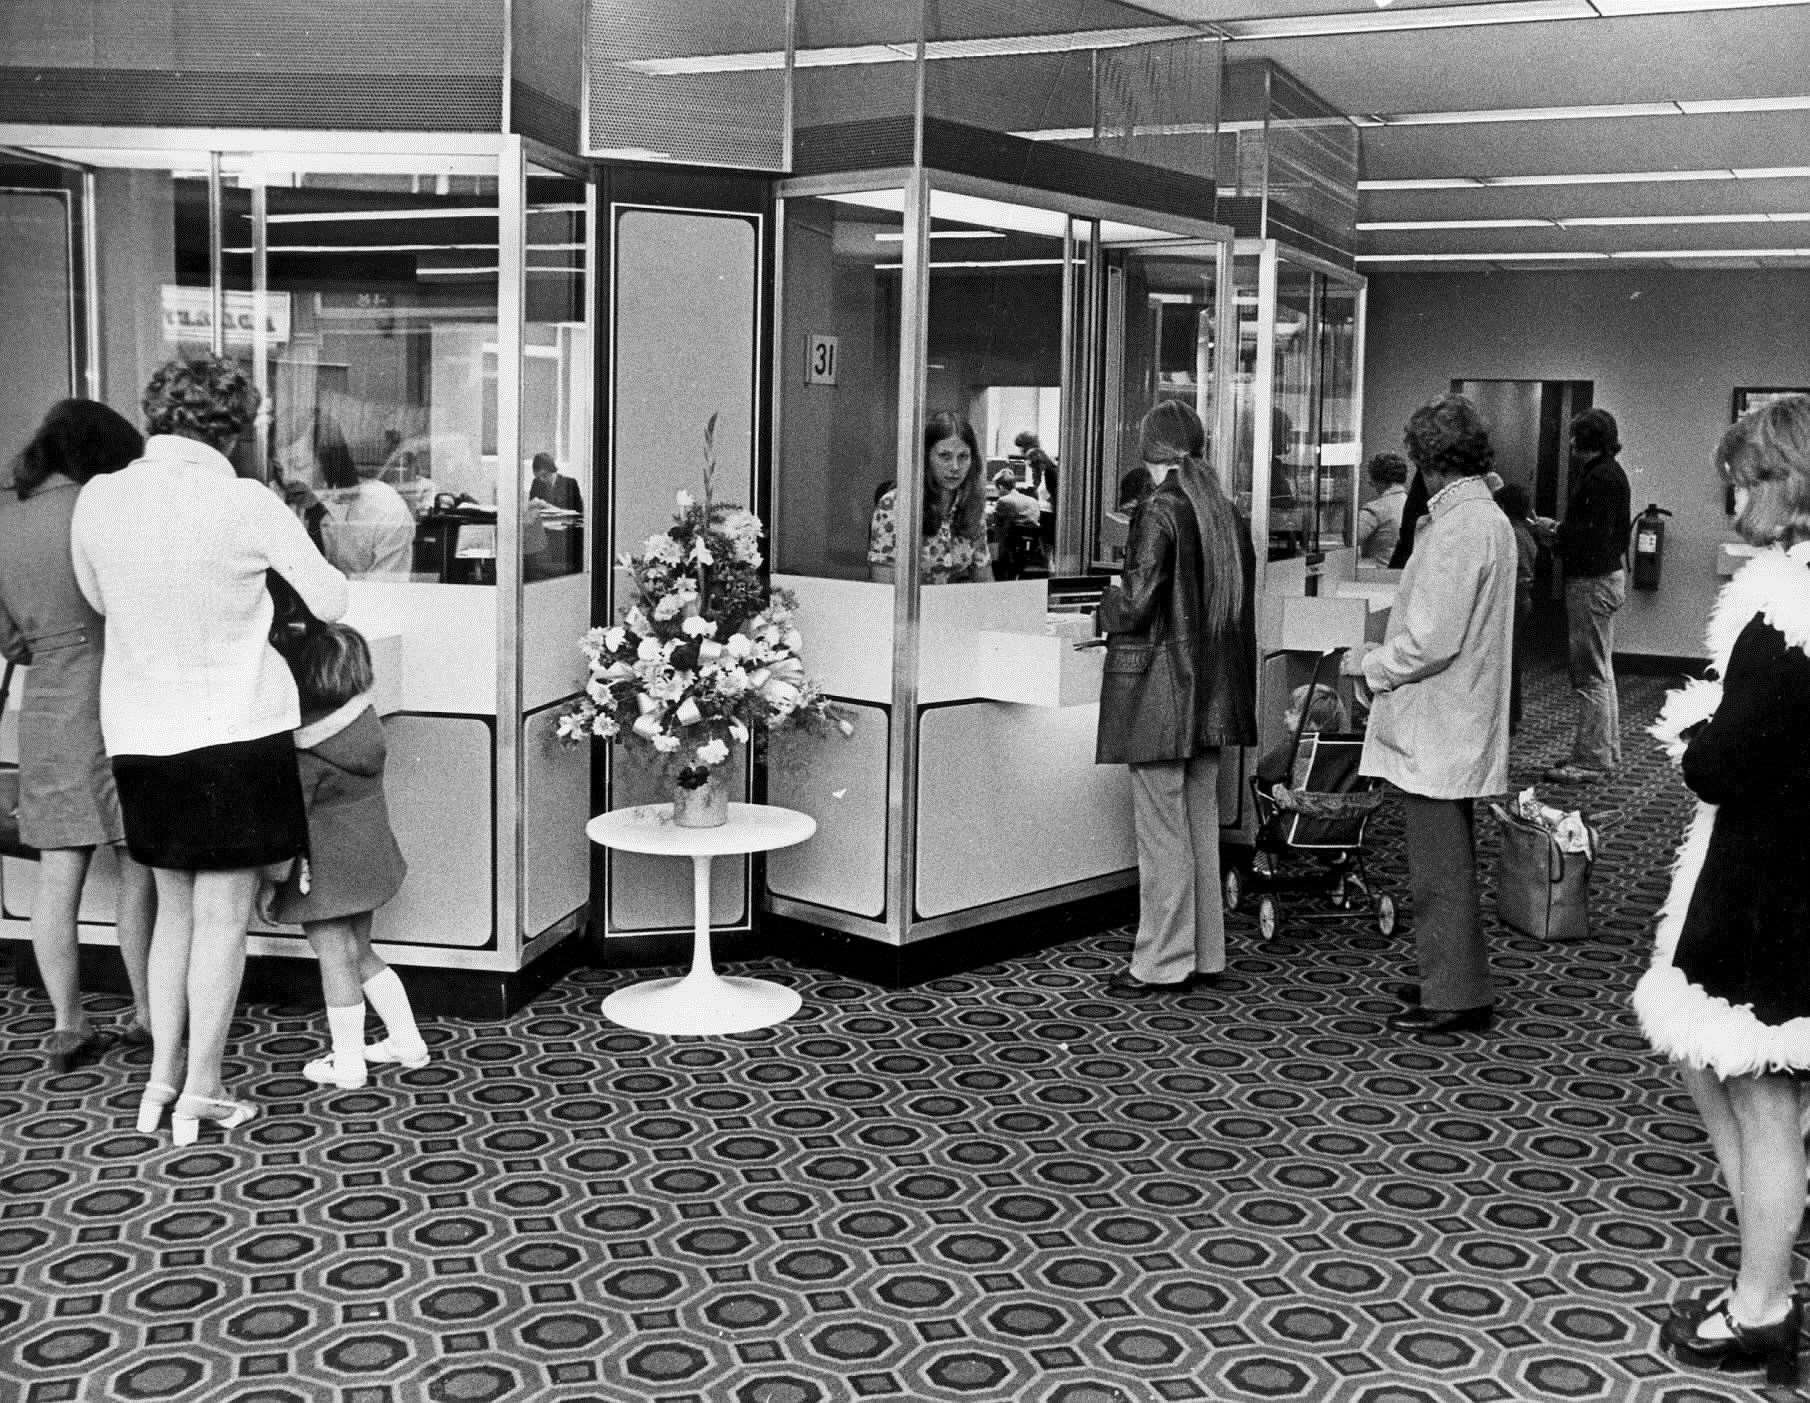 Inside a bank branch in Ashford in May 1974